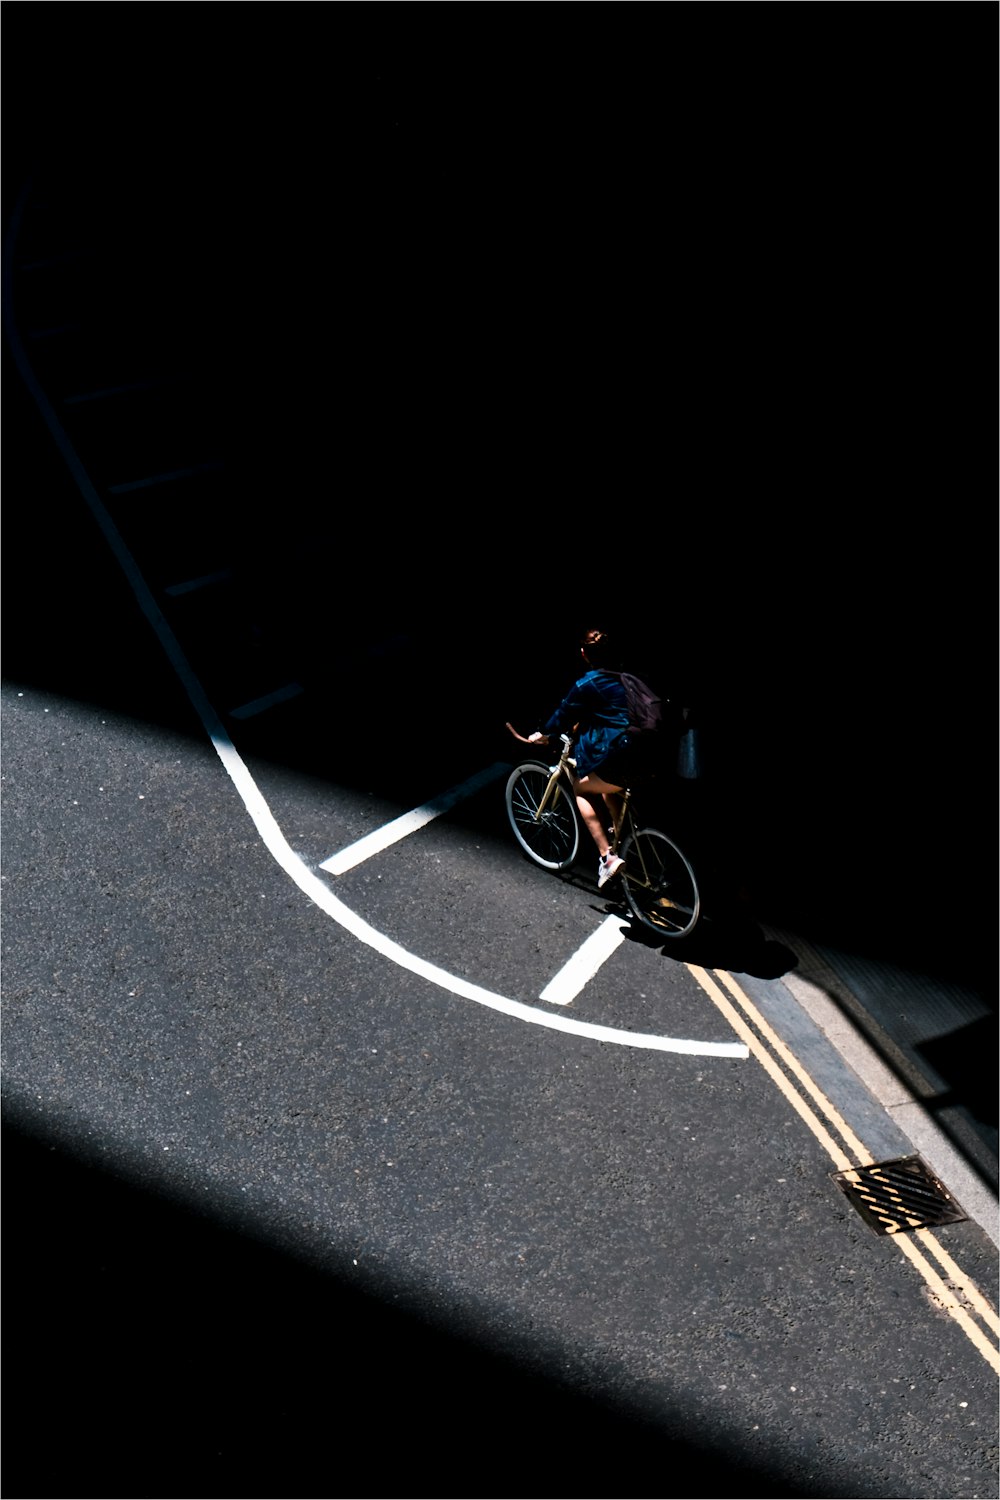 homem na jaqueta azul que monta a bicicleta na estrada do asfalto preto durante a noite